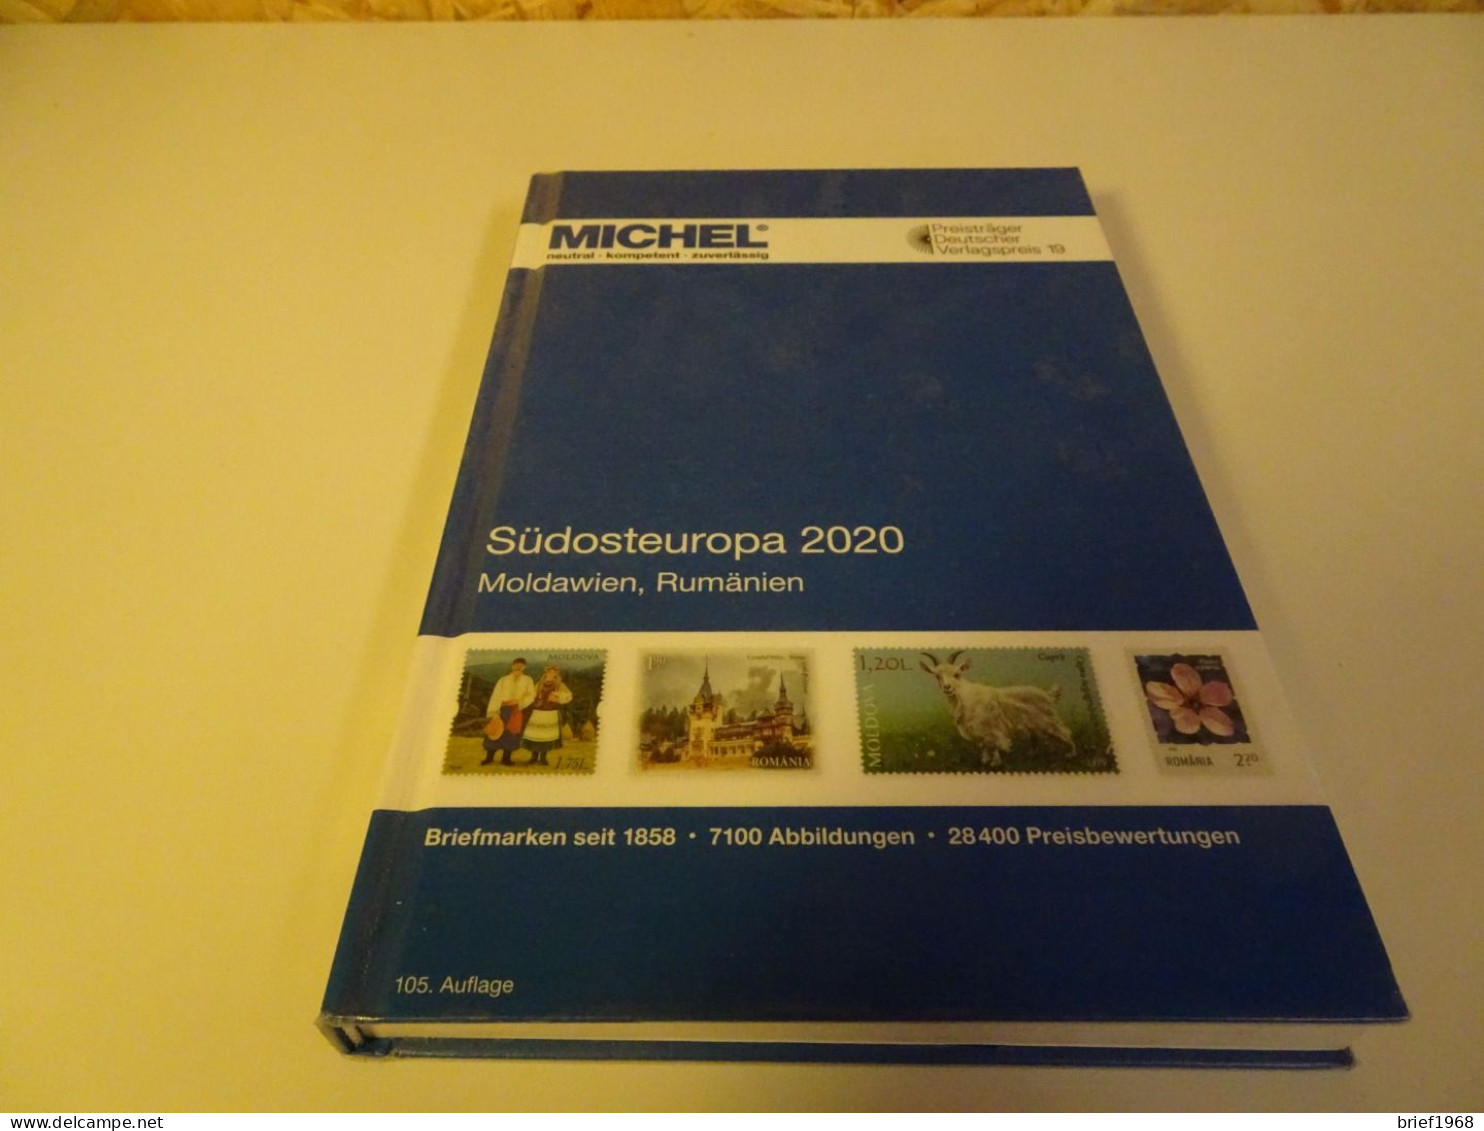 Michel Südosteuropa 2020 (25186) - Germany